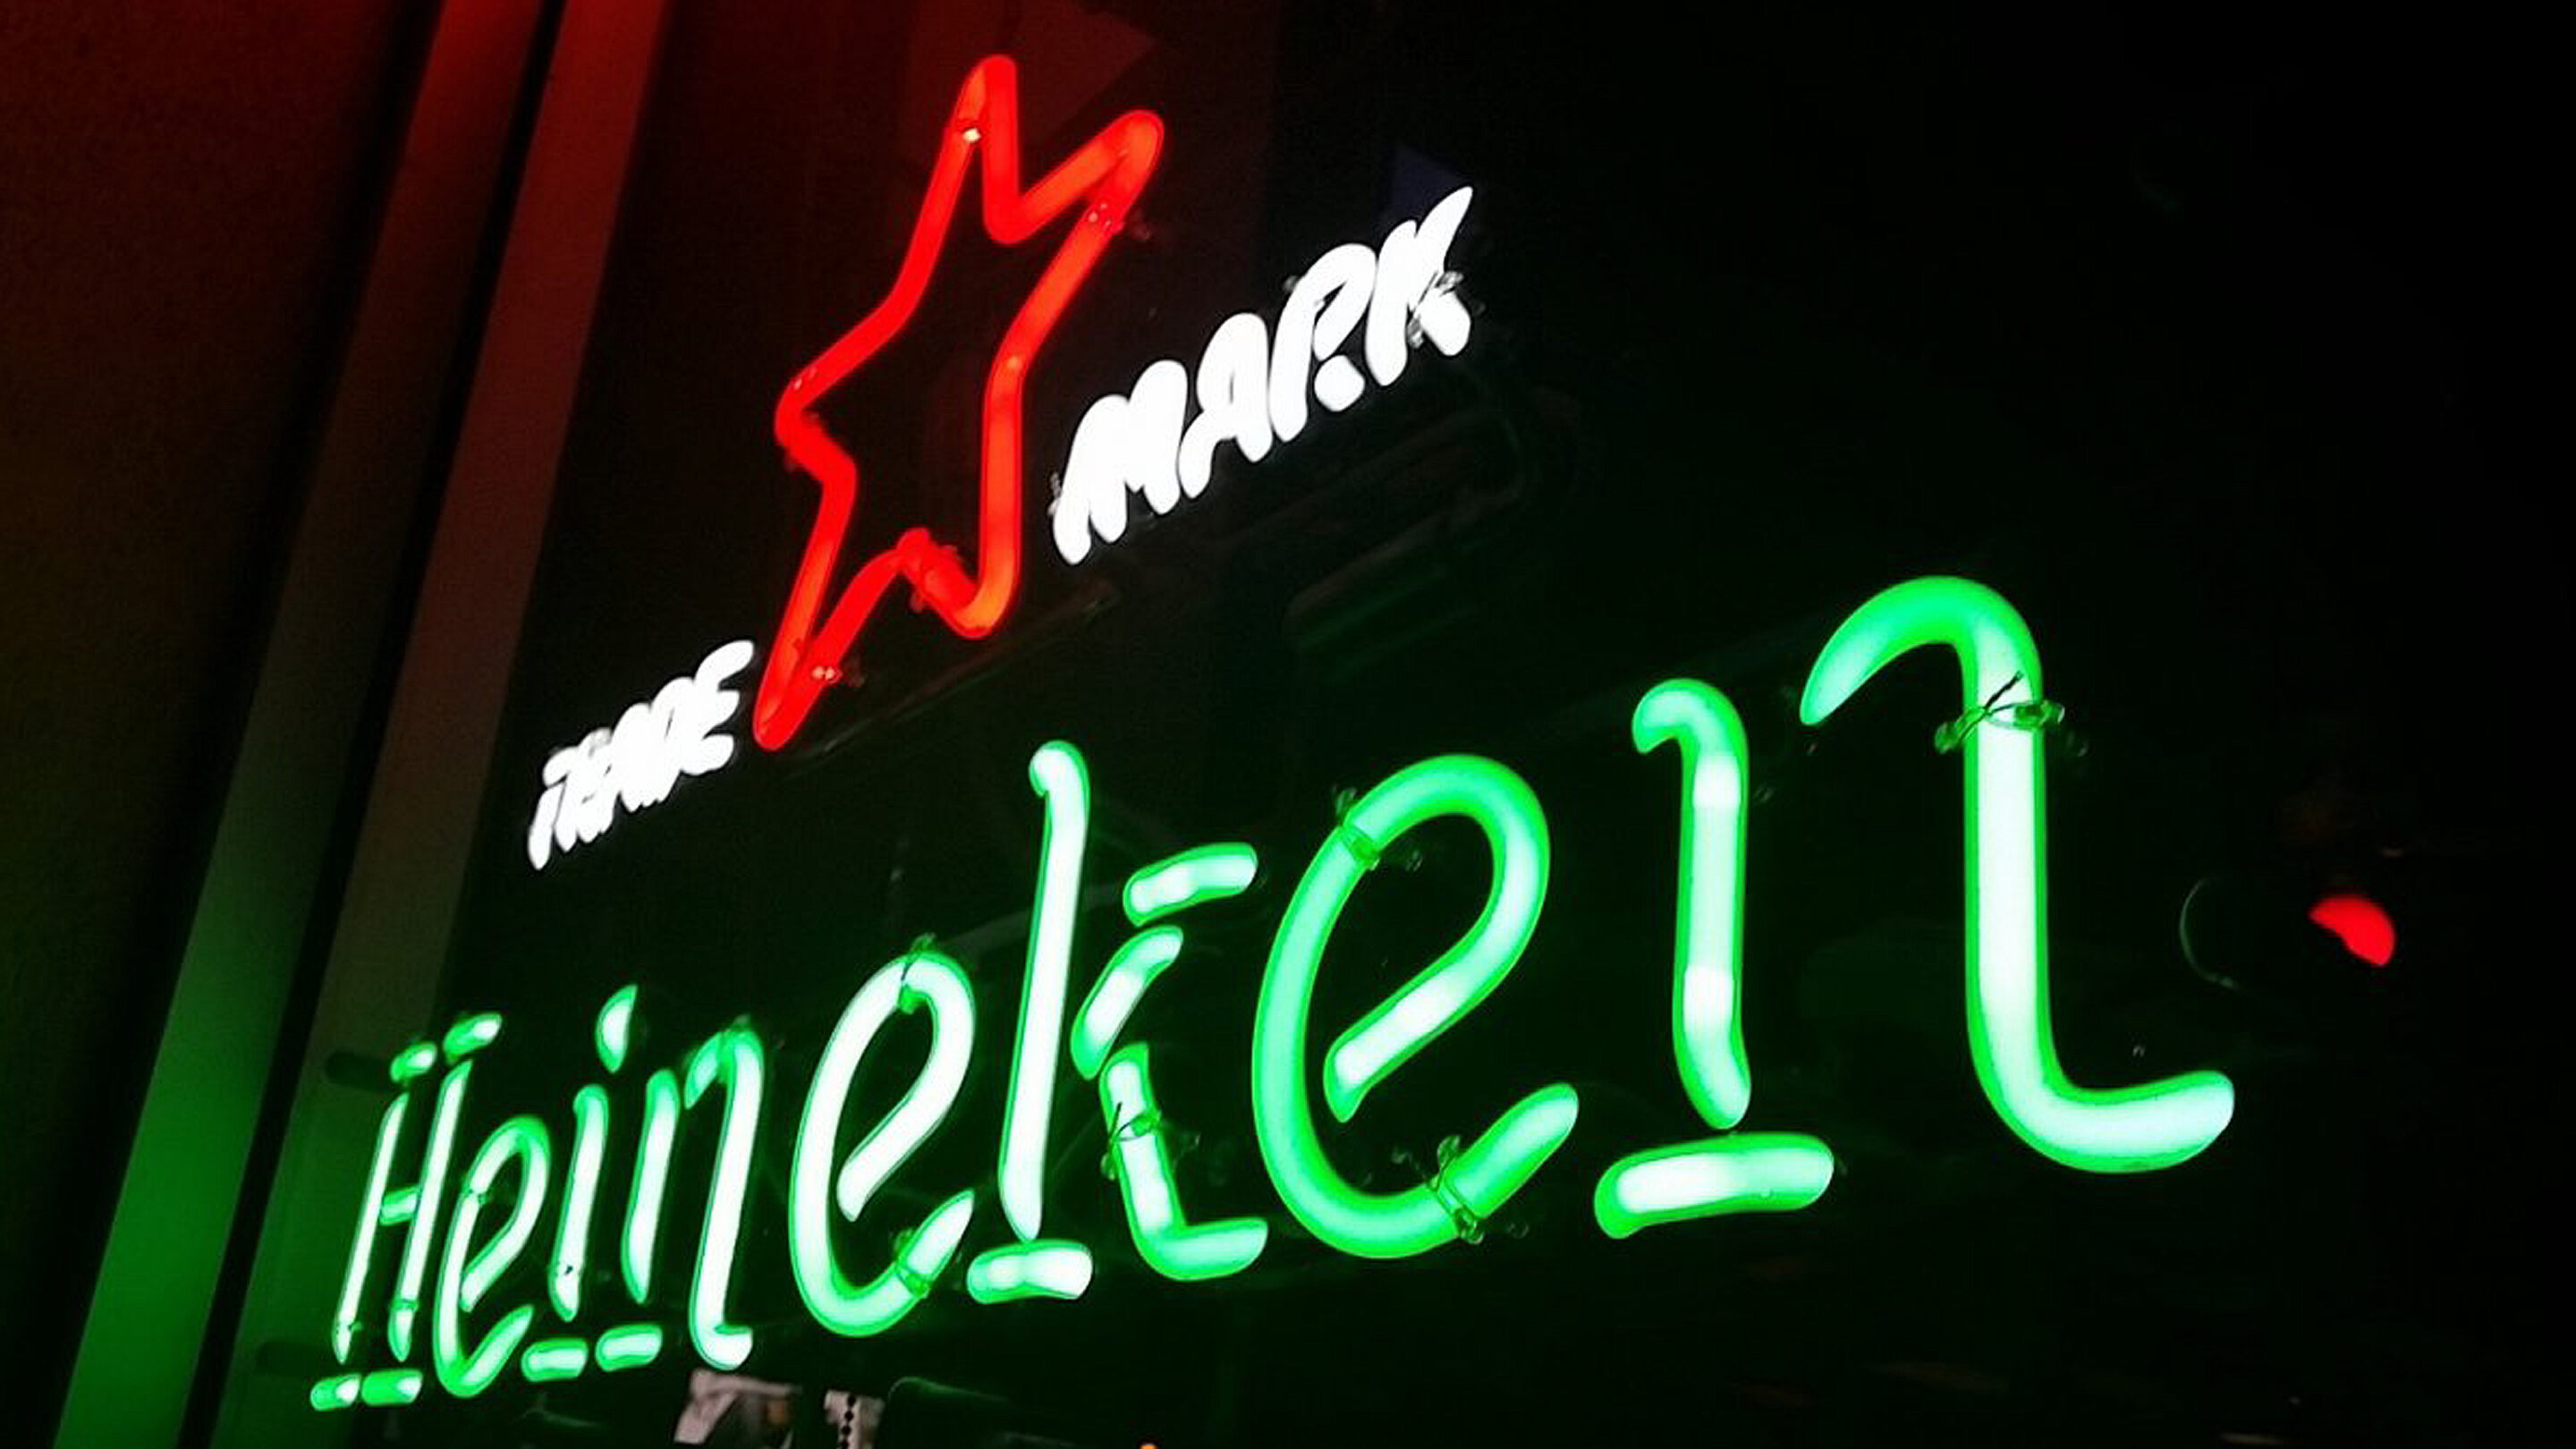 Effective Digital Corporate Communication at Heineken